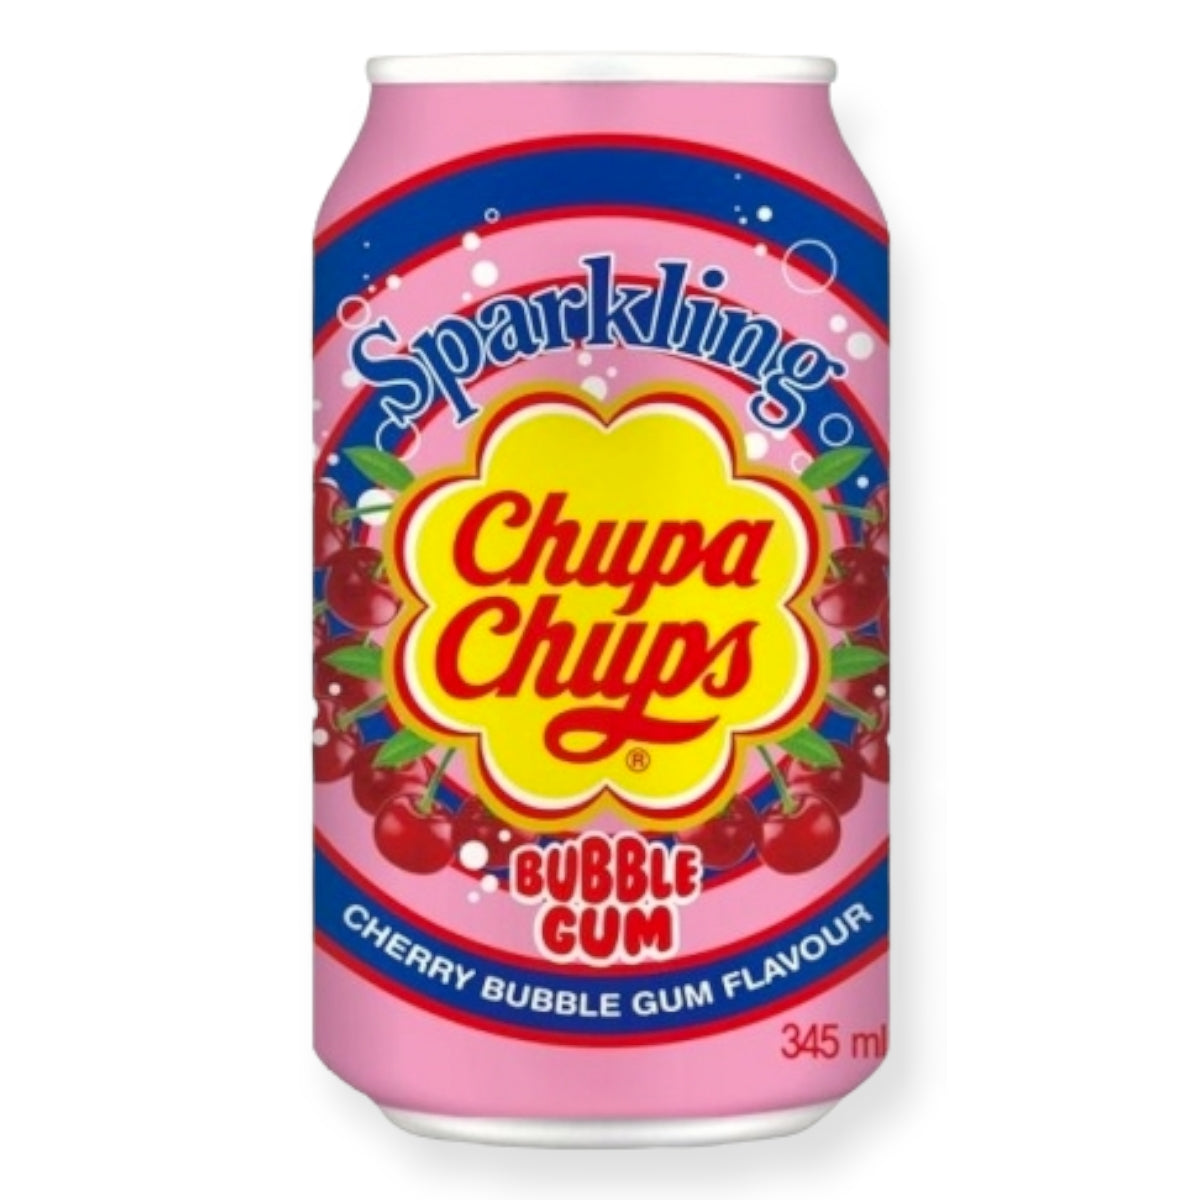 CHUPA CHUPS - SPARKLING DRINK-American Fitness 2.0